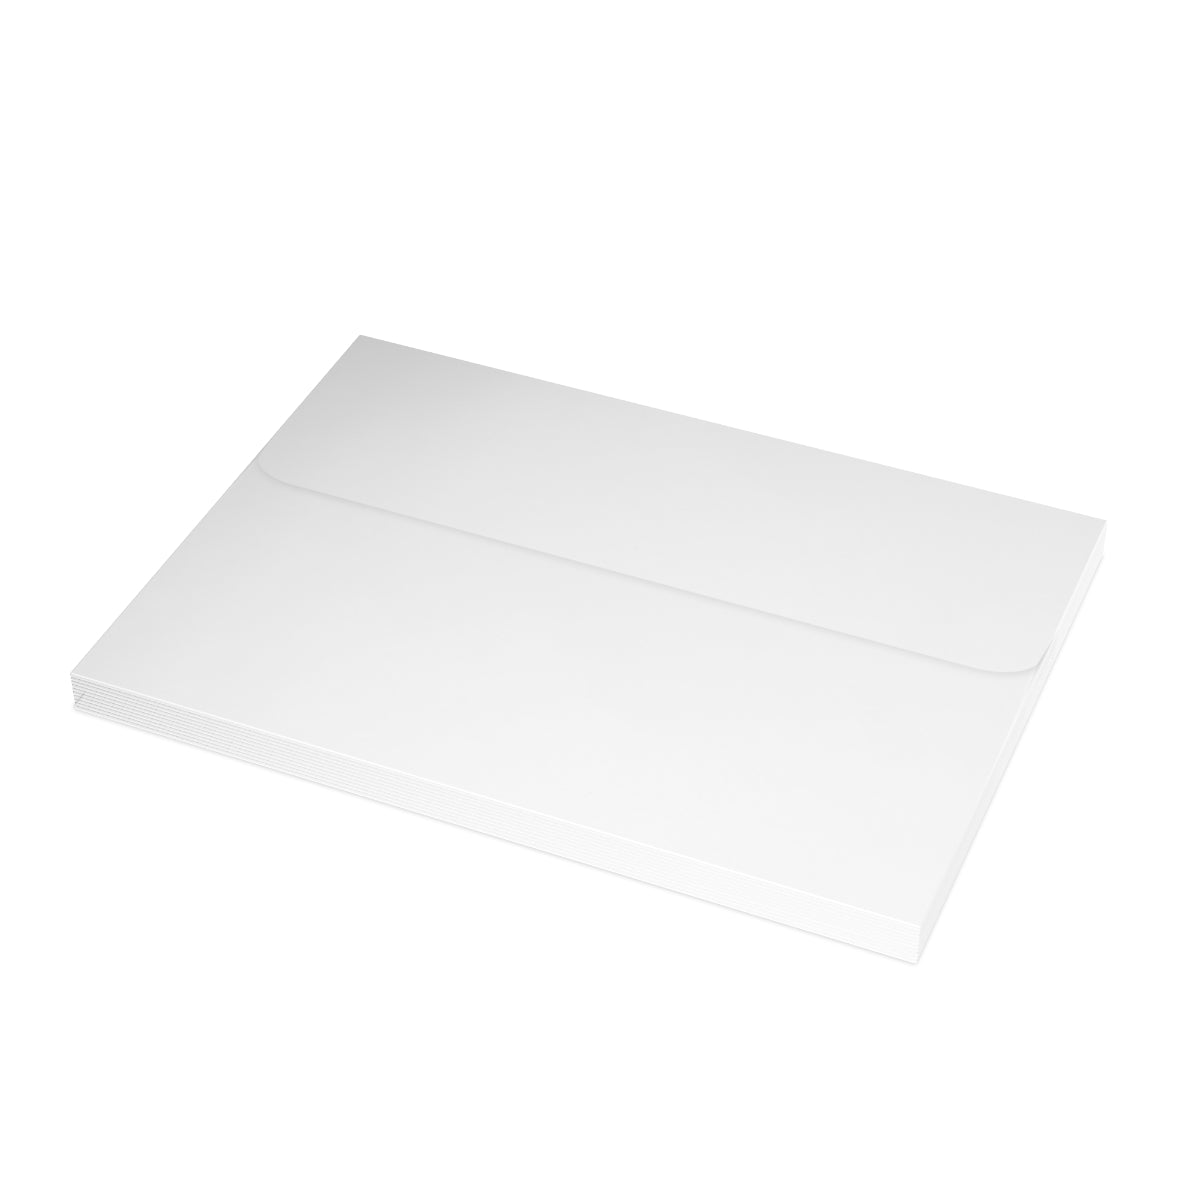 Arches National Park Folded Matte Notecards + Envelopes (10pcs)